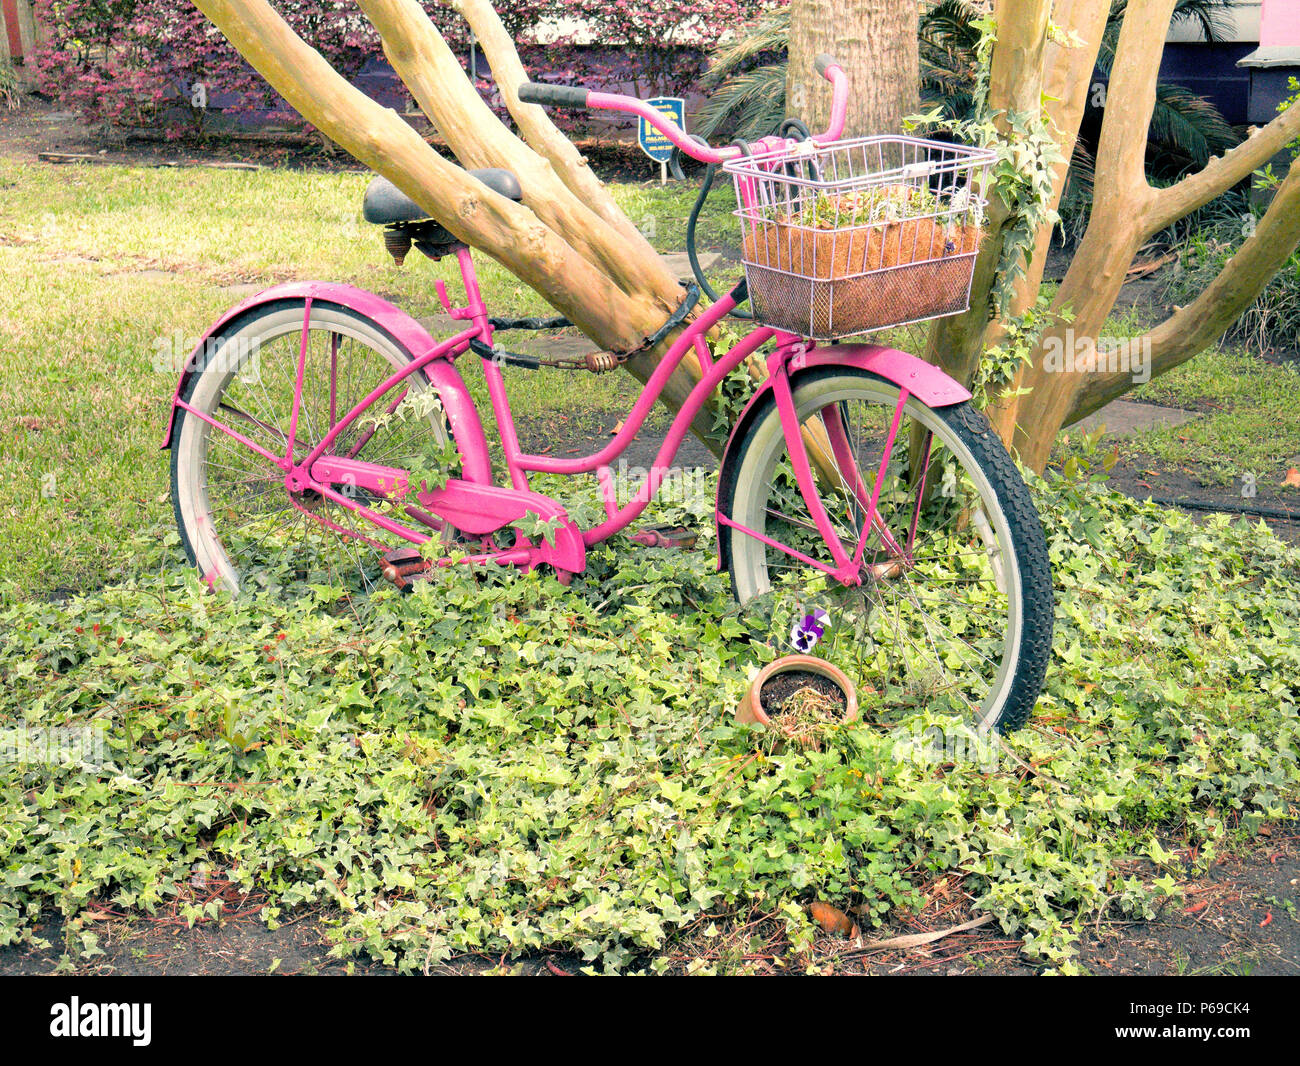 Art Bike, an old bike painted pink as an art installation. Stock Photo